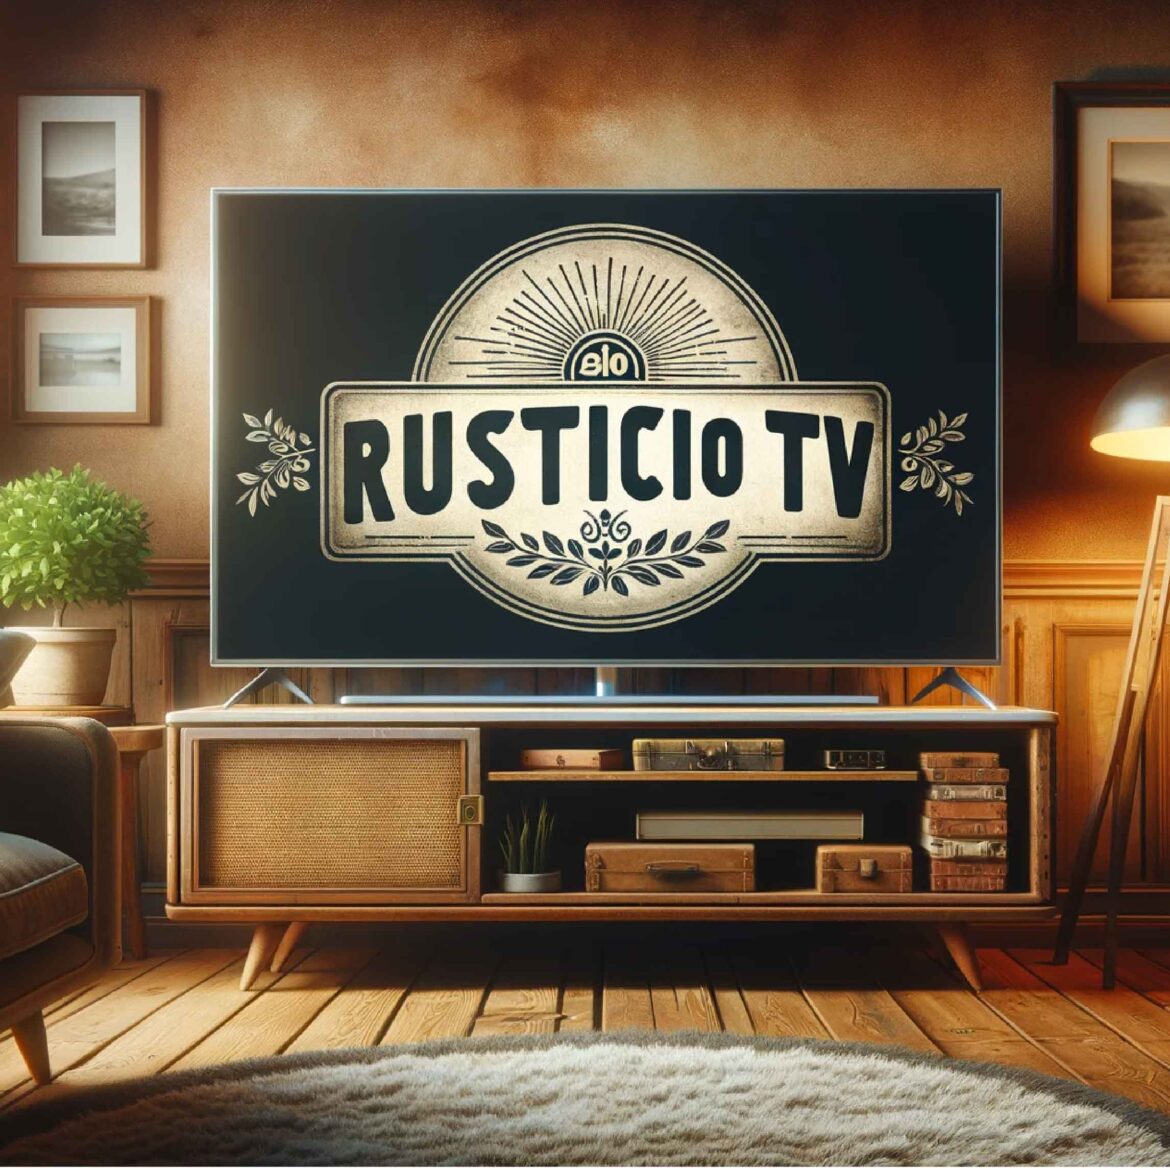 RusticoTV Revolutionizing Rustic Charm in Modern Broadcasting